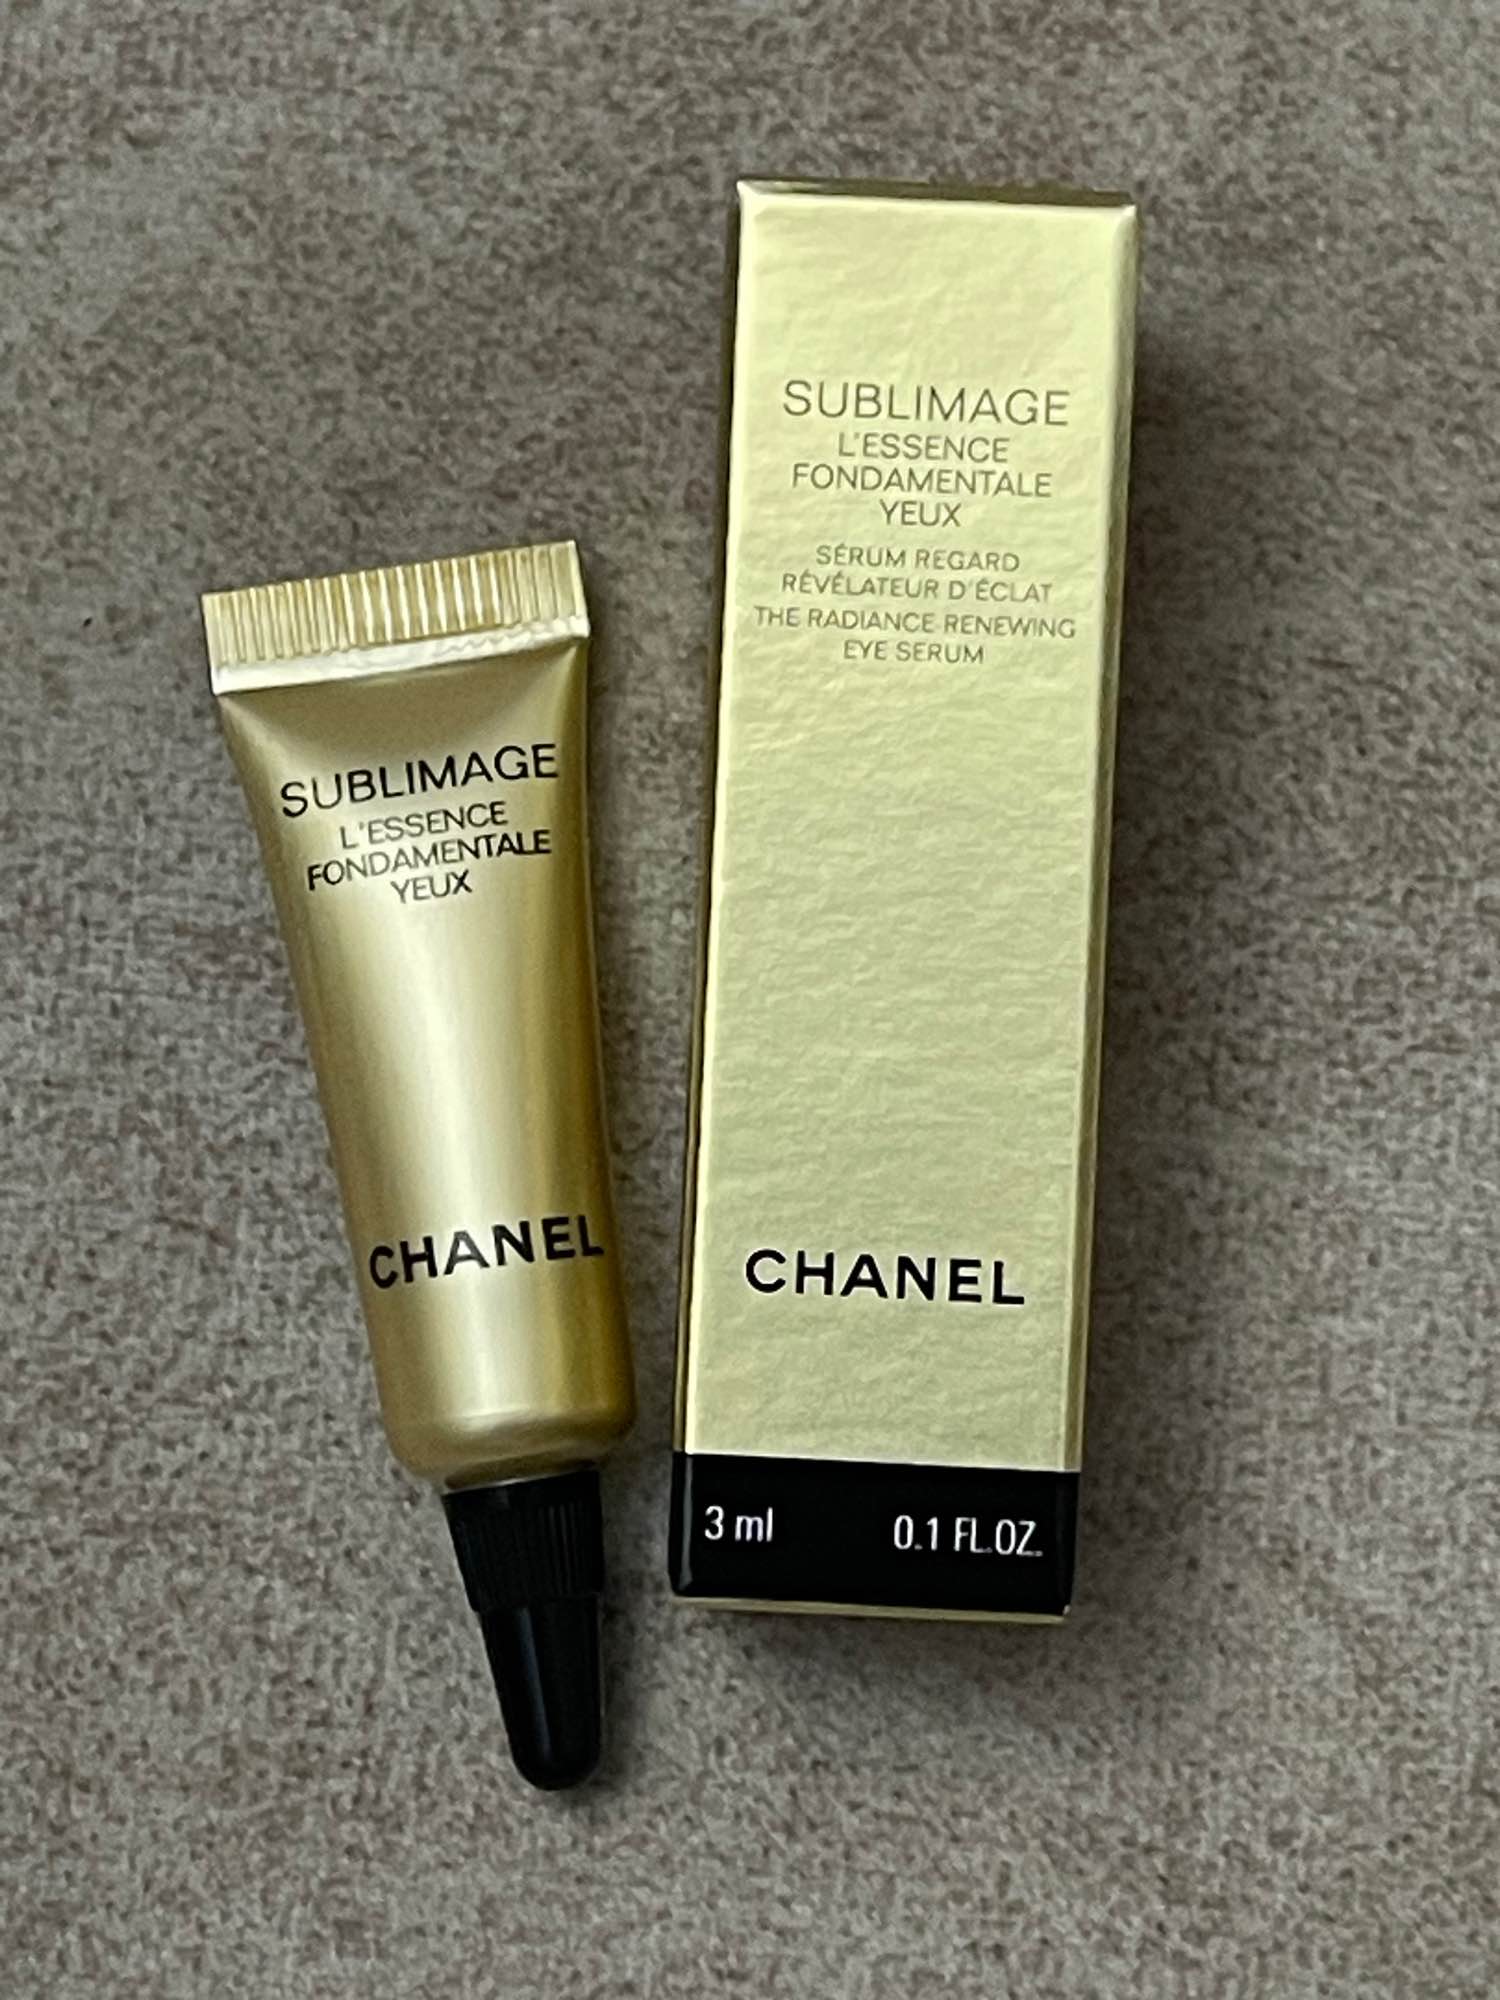 Chanel Sublimage L'Essence Fondamentale Yeux eye serum 3ml